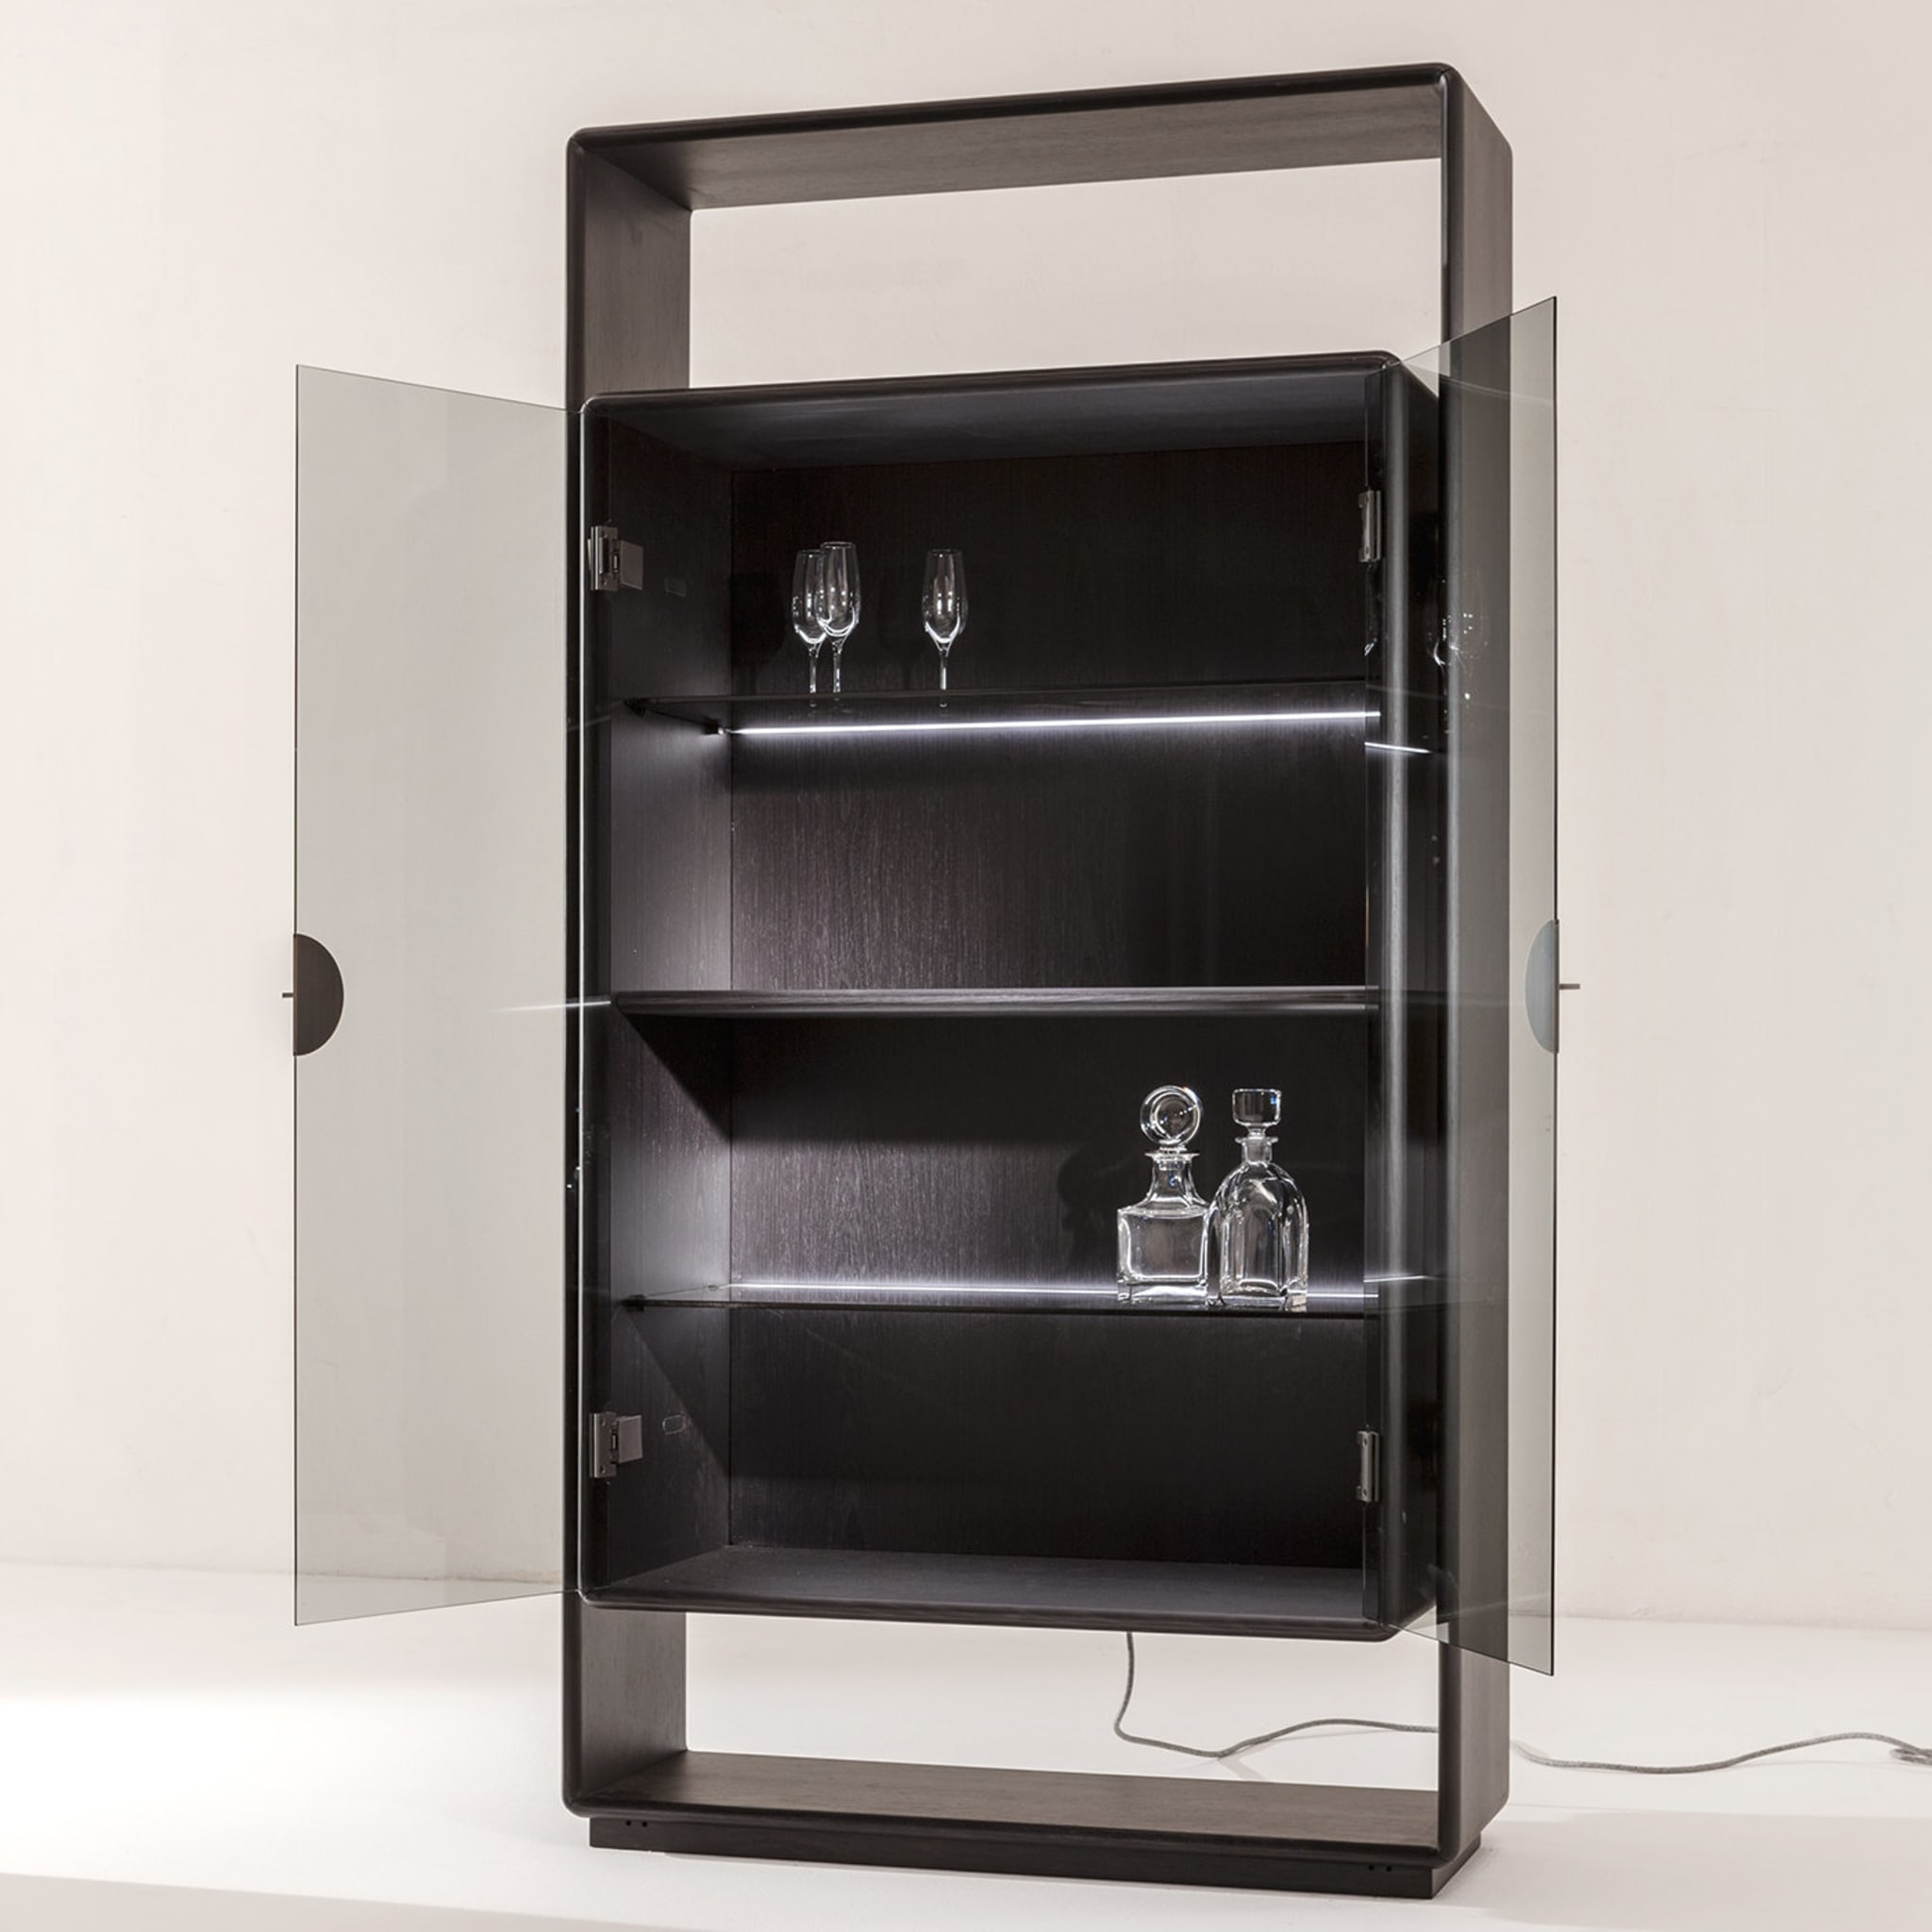 Talento Cabinet by Edoardo Colzani Design - Alternative view 5